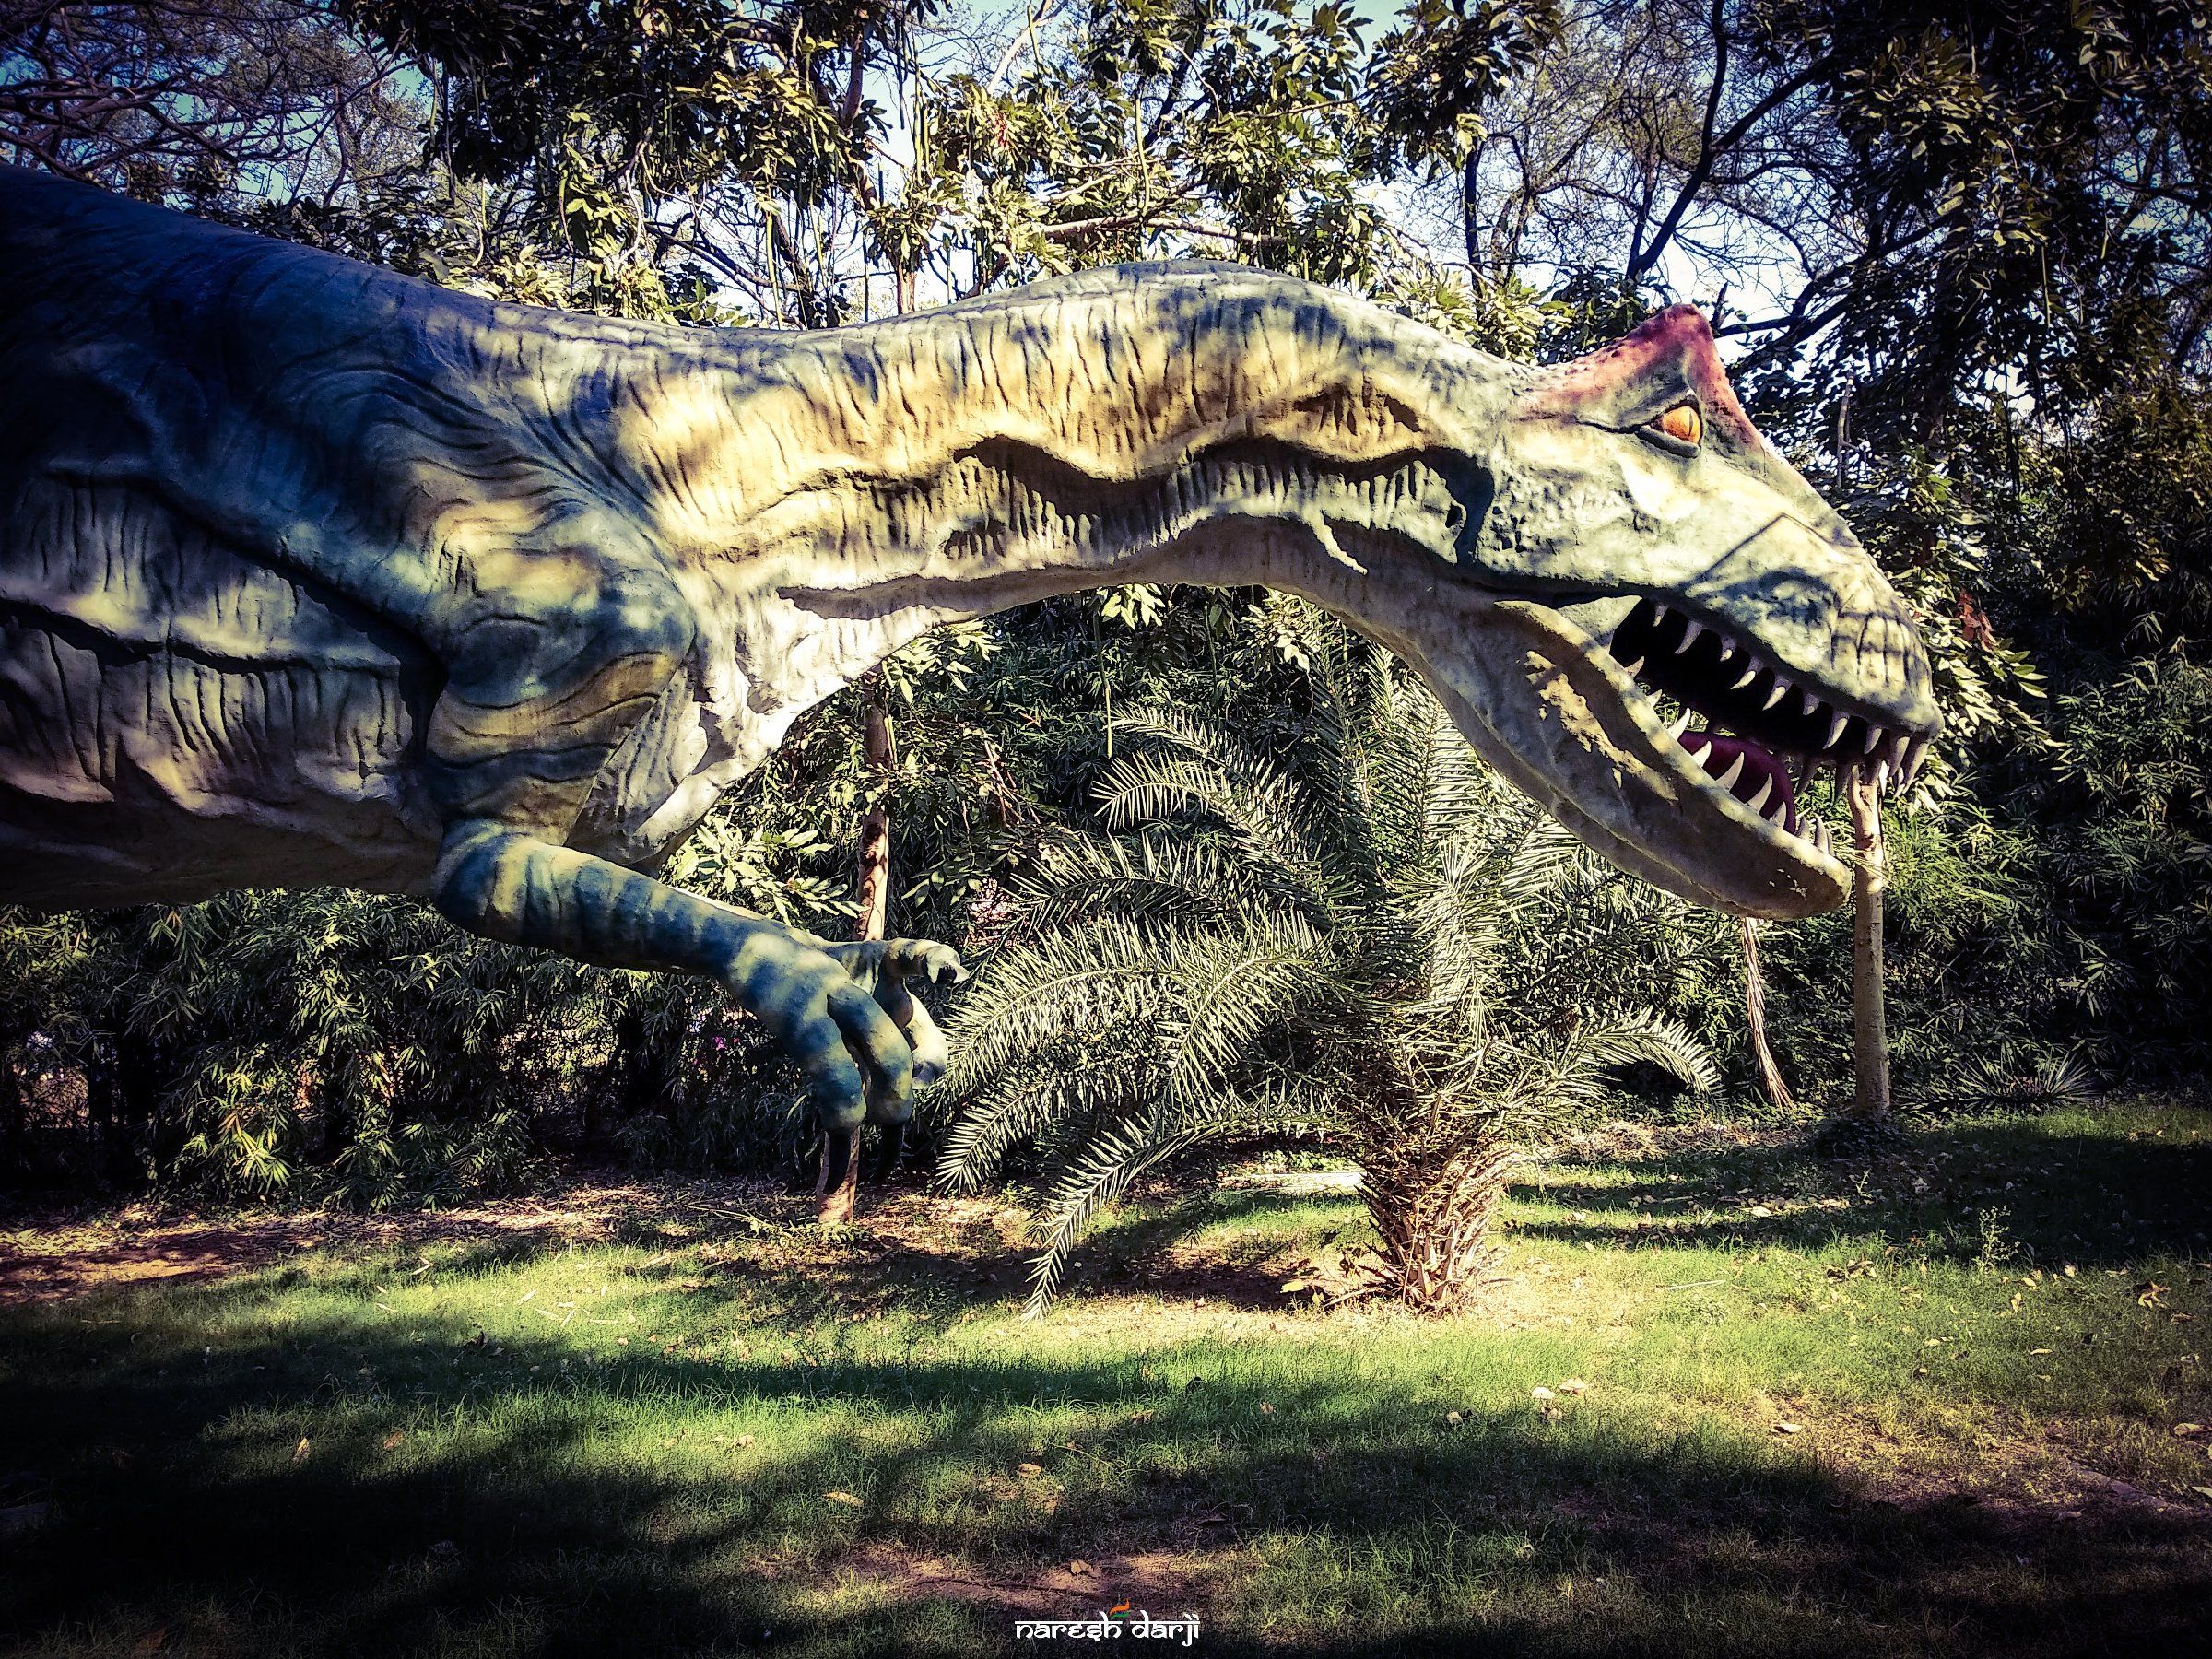 Dinosaur sculpture inside the nature park